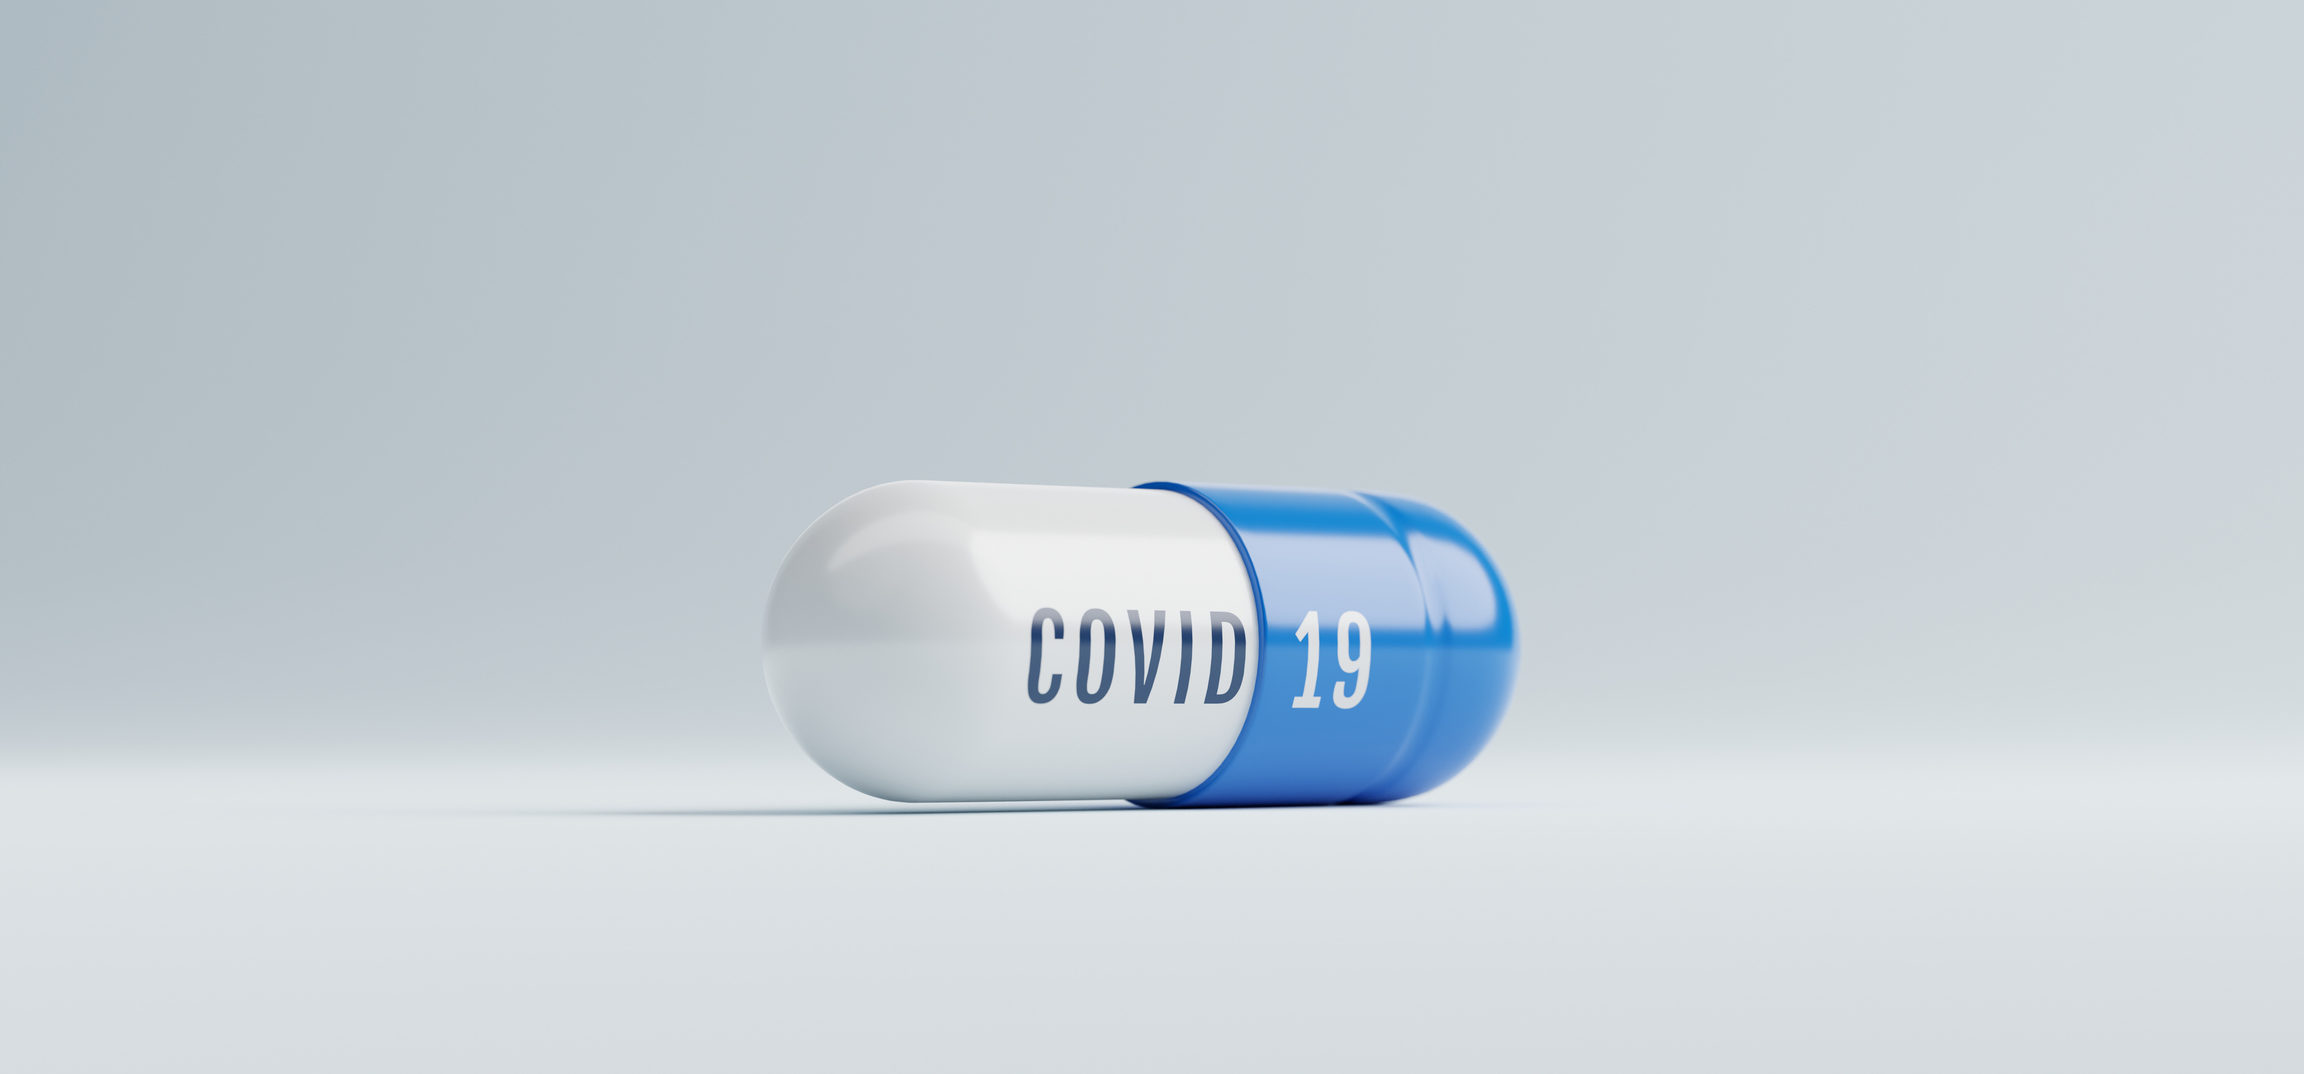 La EMA autoriza el uso de emergencia de Paxlovid, el antiviral de Pfizer  frente a la COVID-19